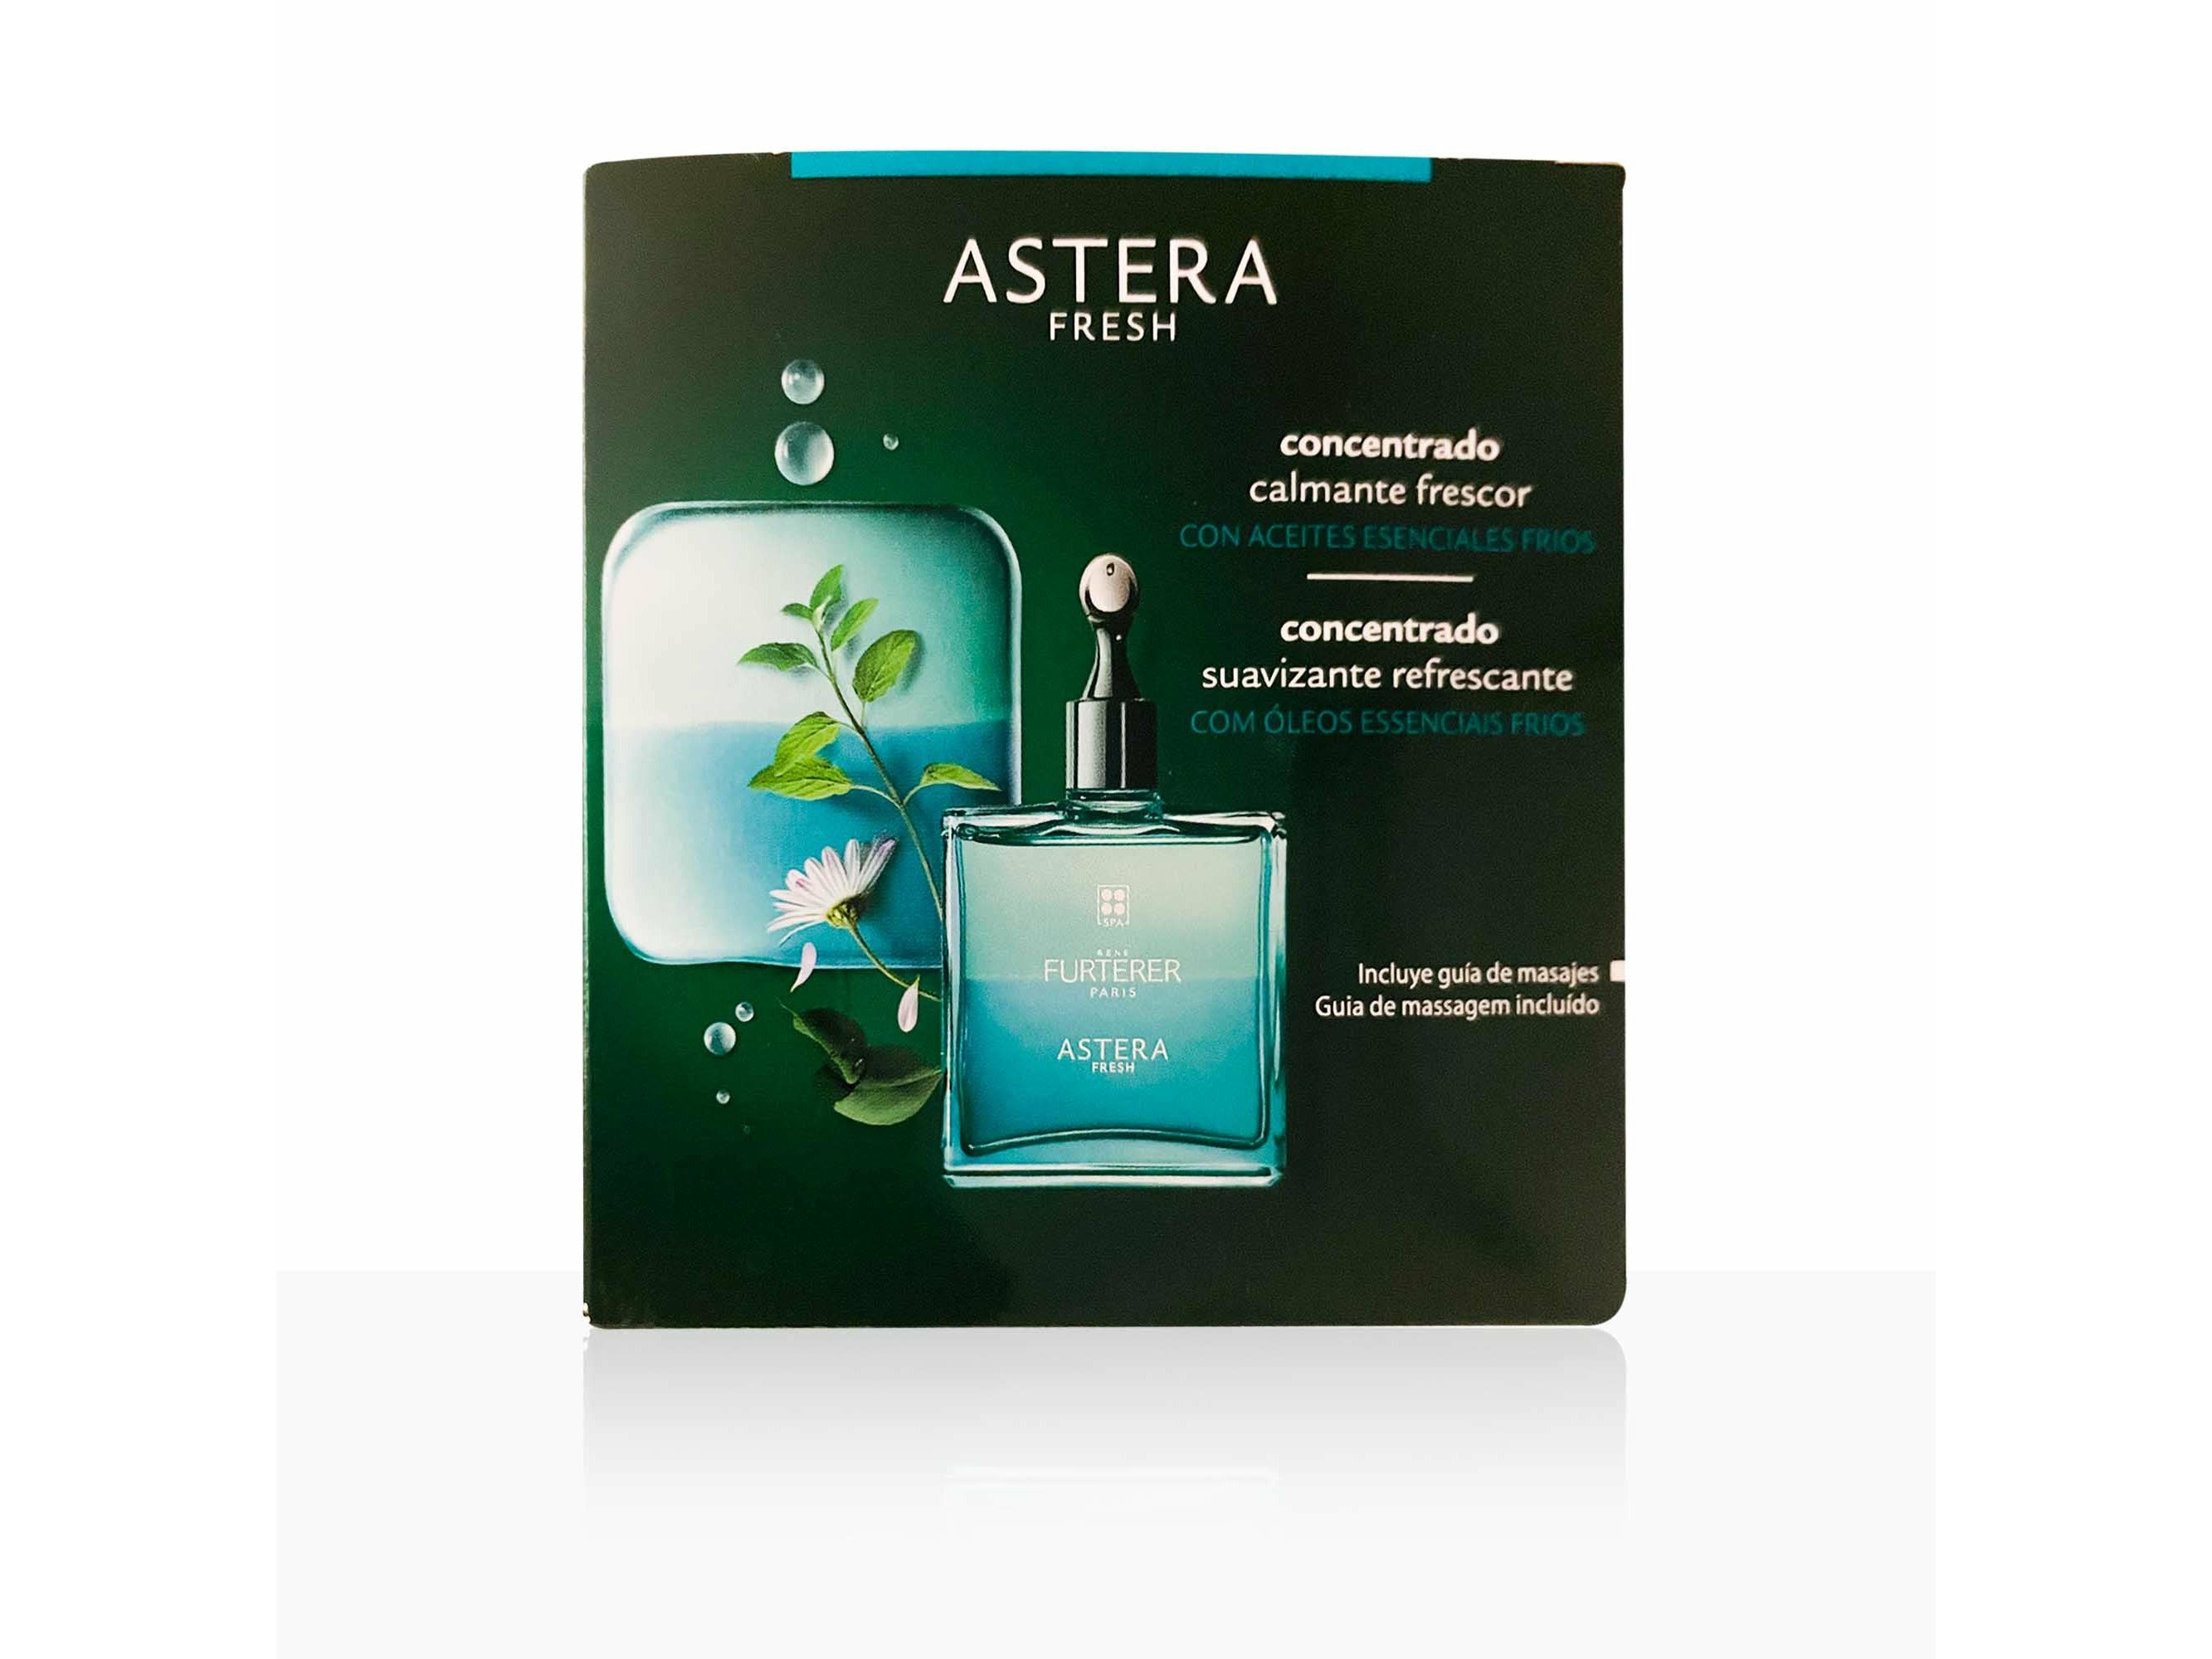 Rene Furterer Astera Fresh Soothing Freshness Concentrate - Clinikally